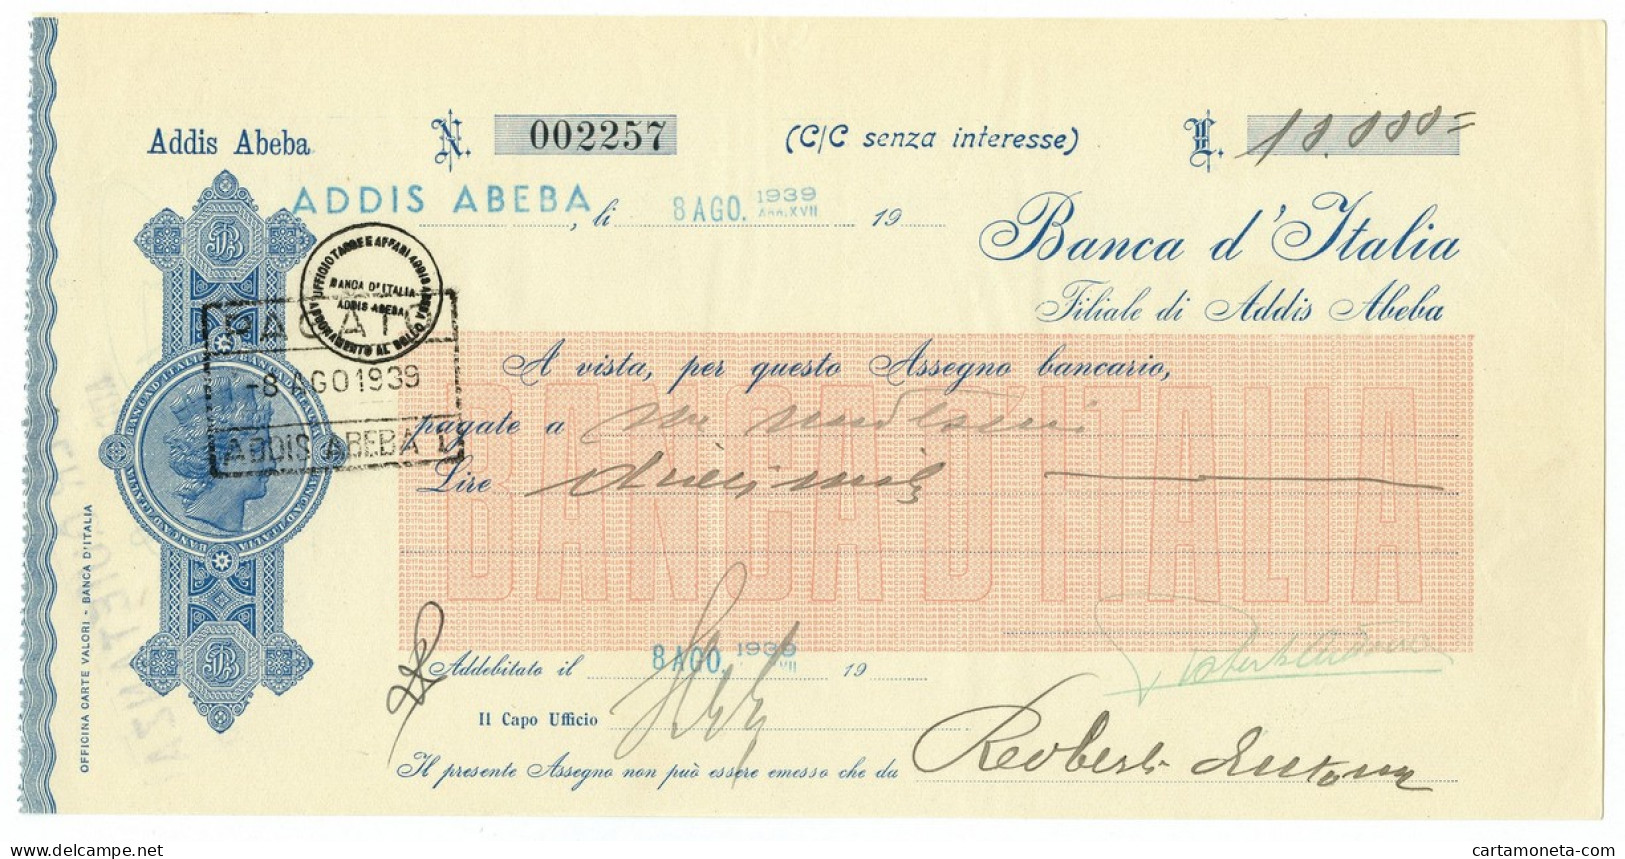 10000 LIRE ASSEGNO BANCA D'ITALIA FILALE ADDIS ABEBA MOD. ROSSO 08/08/1939 SUP - Italian East Africa